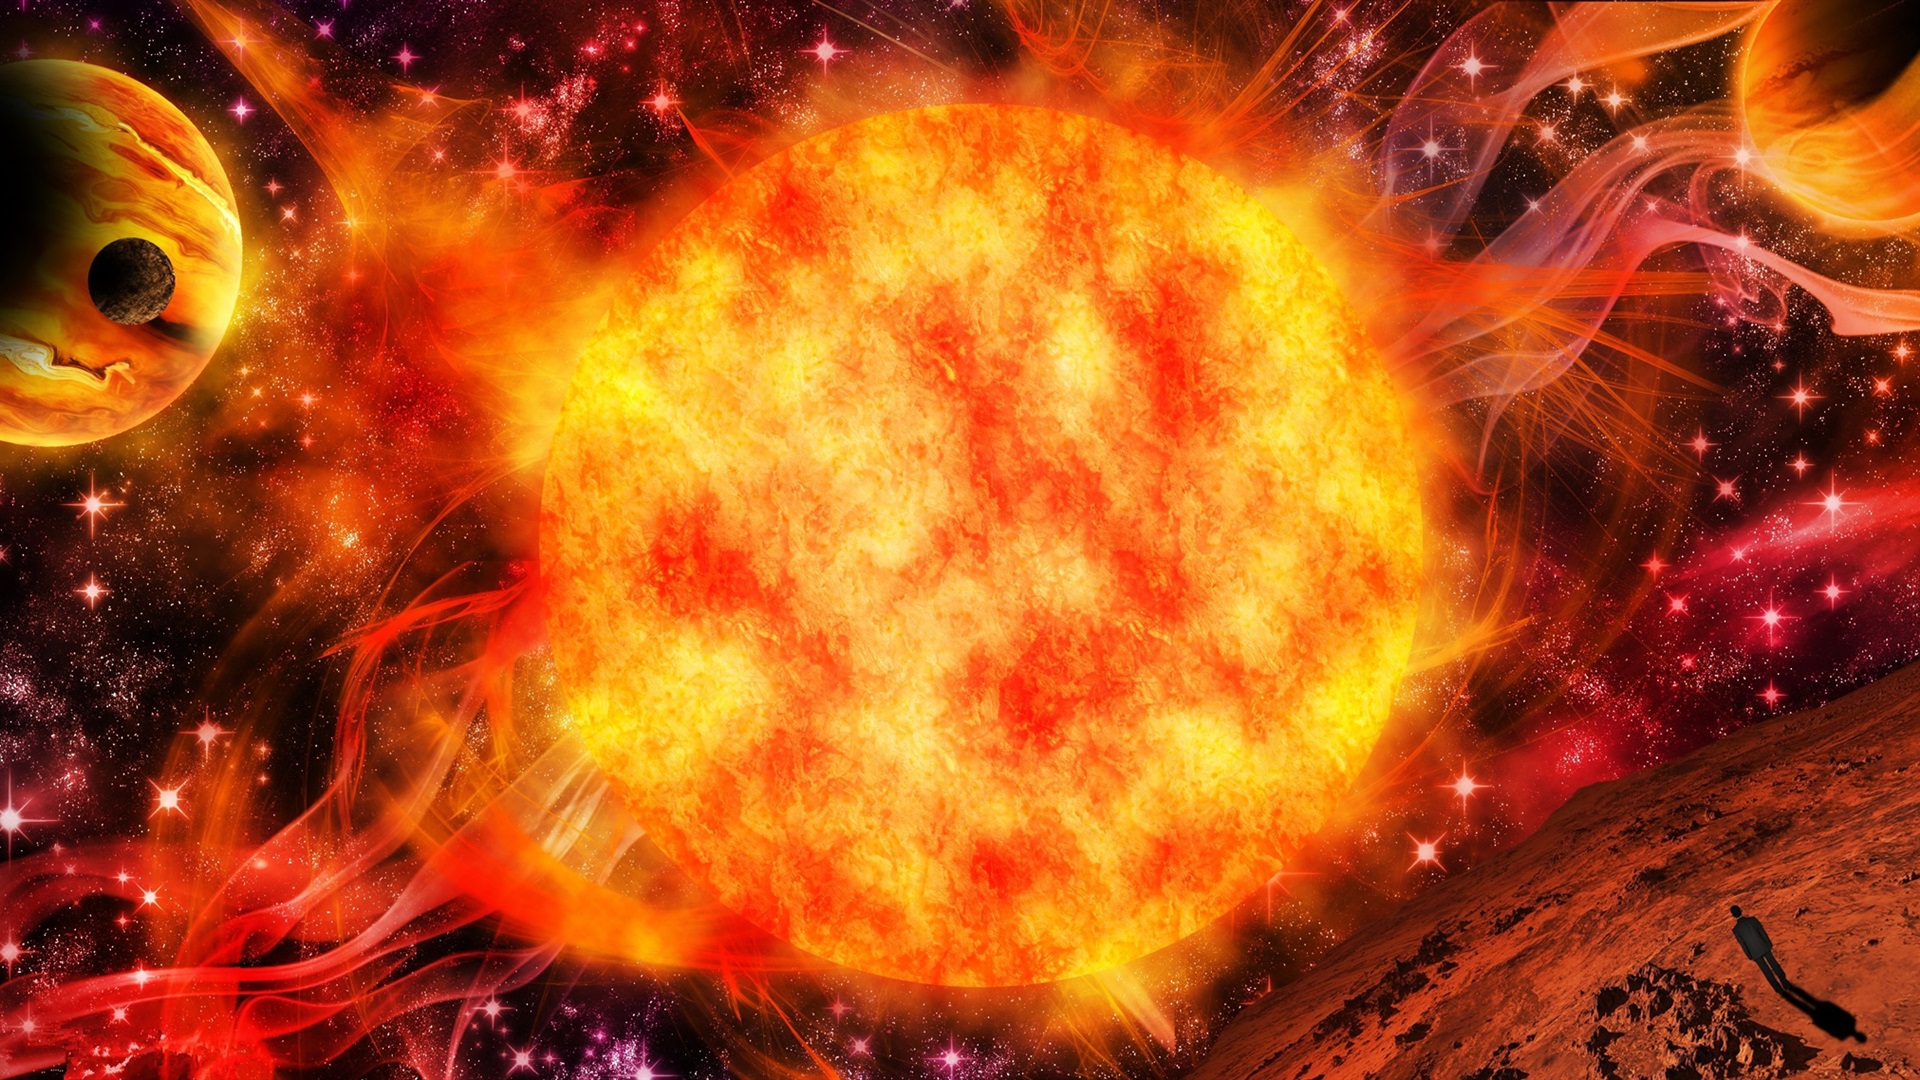 Hot-planet-sun-space_1920x1080.jpg